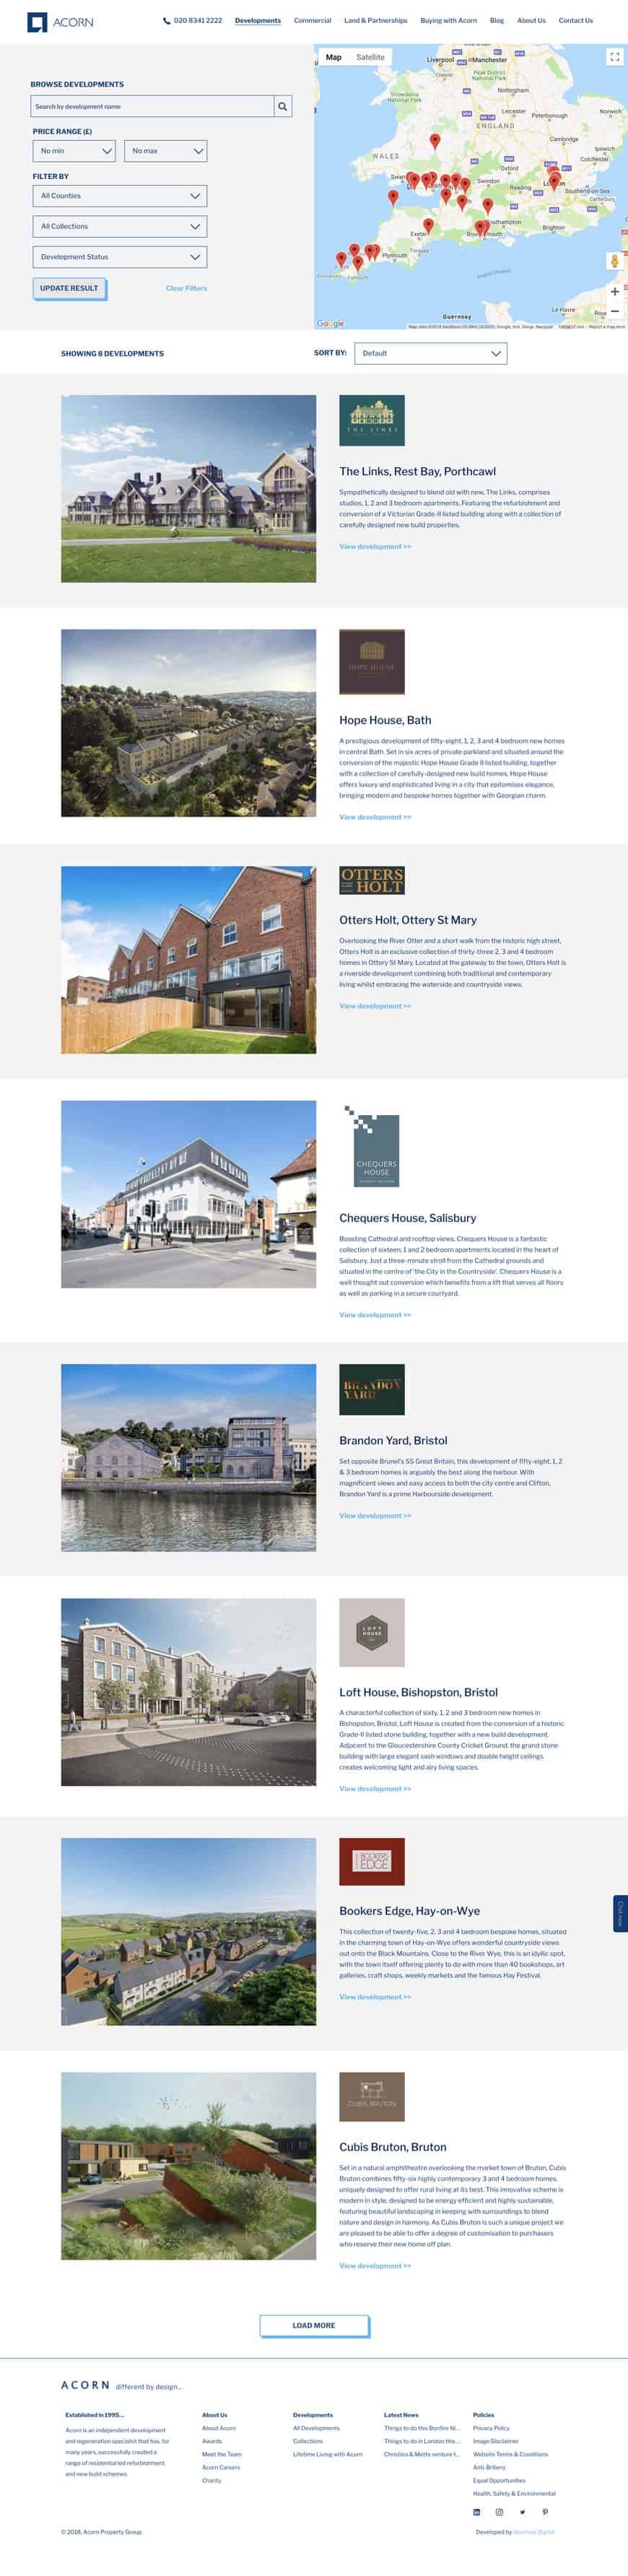 Acorn Property Group Website - Developments Landing Page